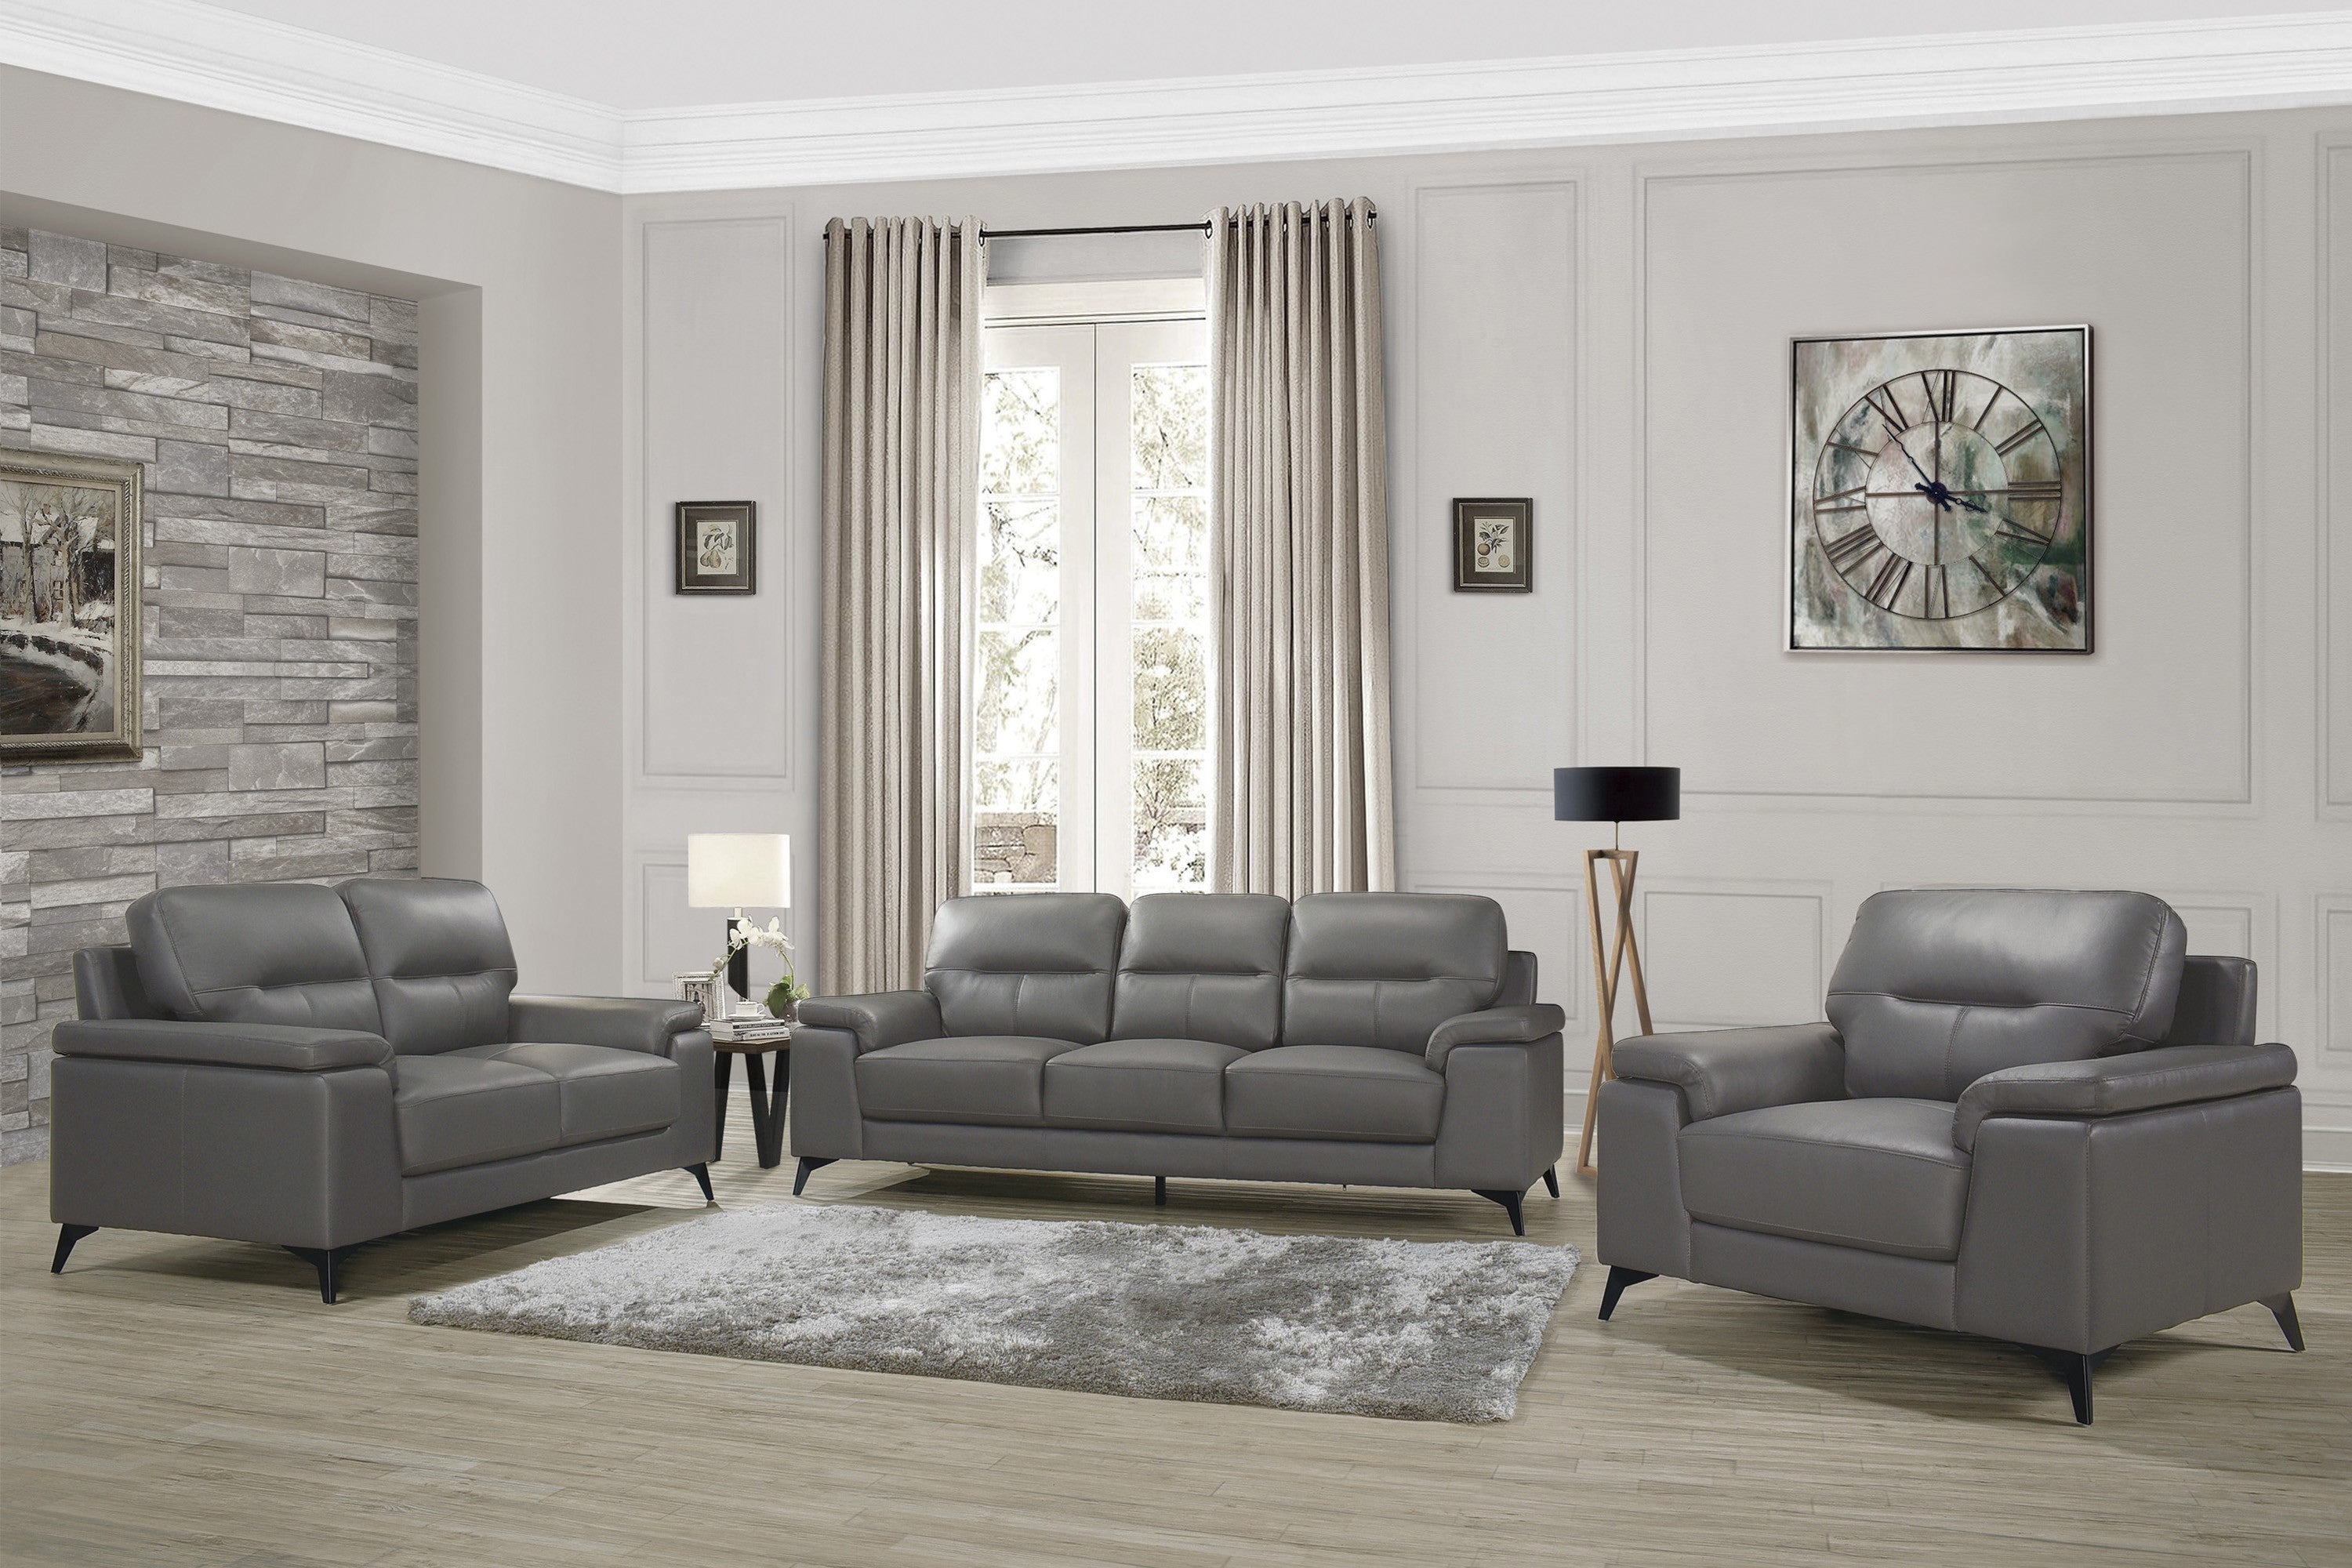 Mischa Dark Gray Top Grain Leather Living Room Set From Homelegance Luna Furniture